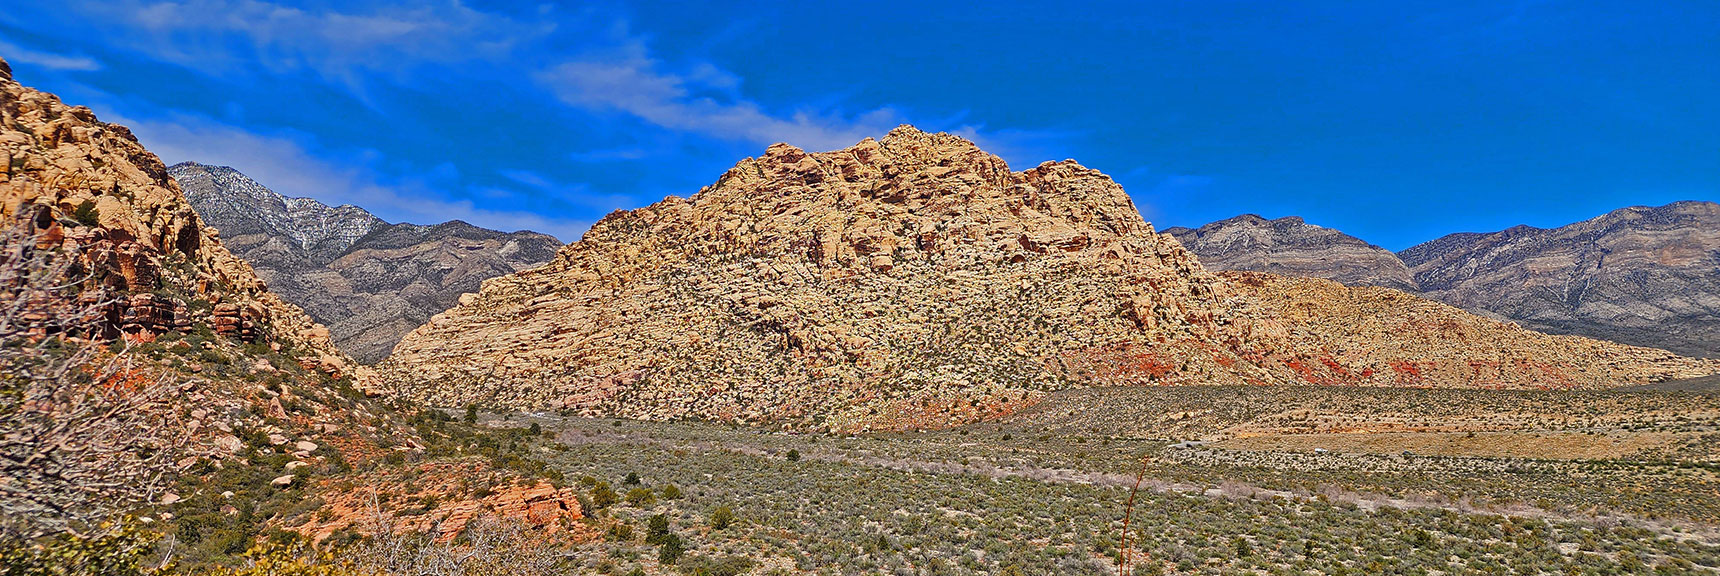 Begin Descent Toward White Rock Mountain | SMYC Trail | Red Rock Canyon National Conservation Area, Nevada | David Smith | LasVegasAreaTrails.com